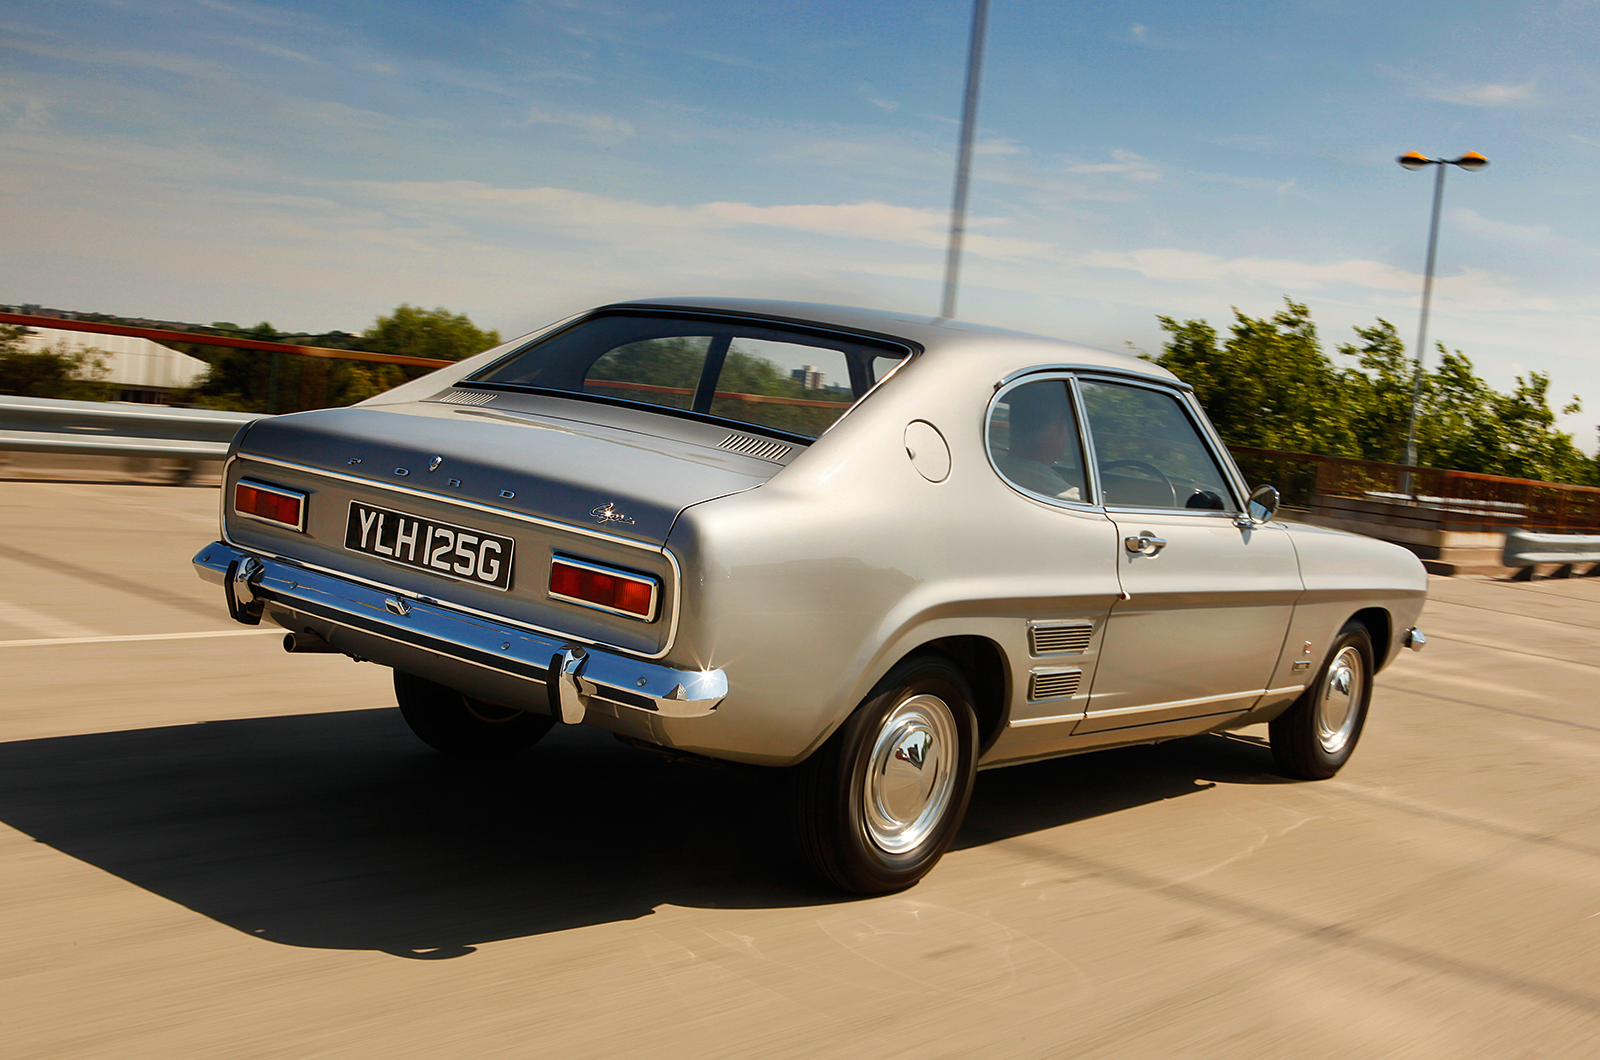 UK's rarest cars: 1969 Ford Capri Mk1 1600L recalls 50 years since